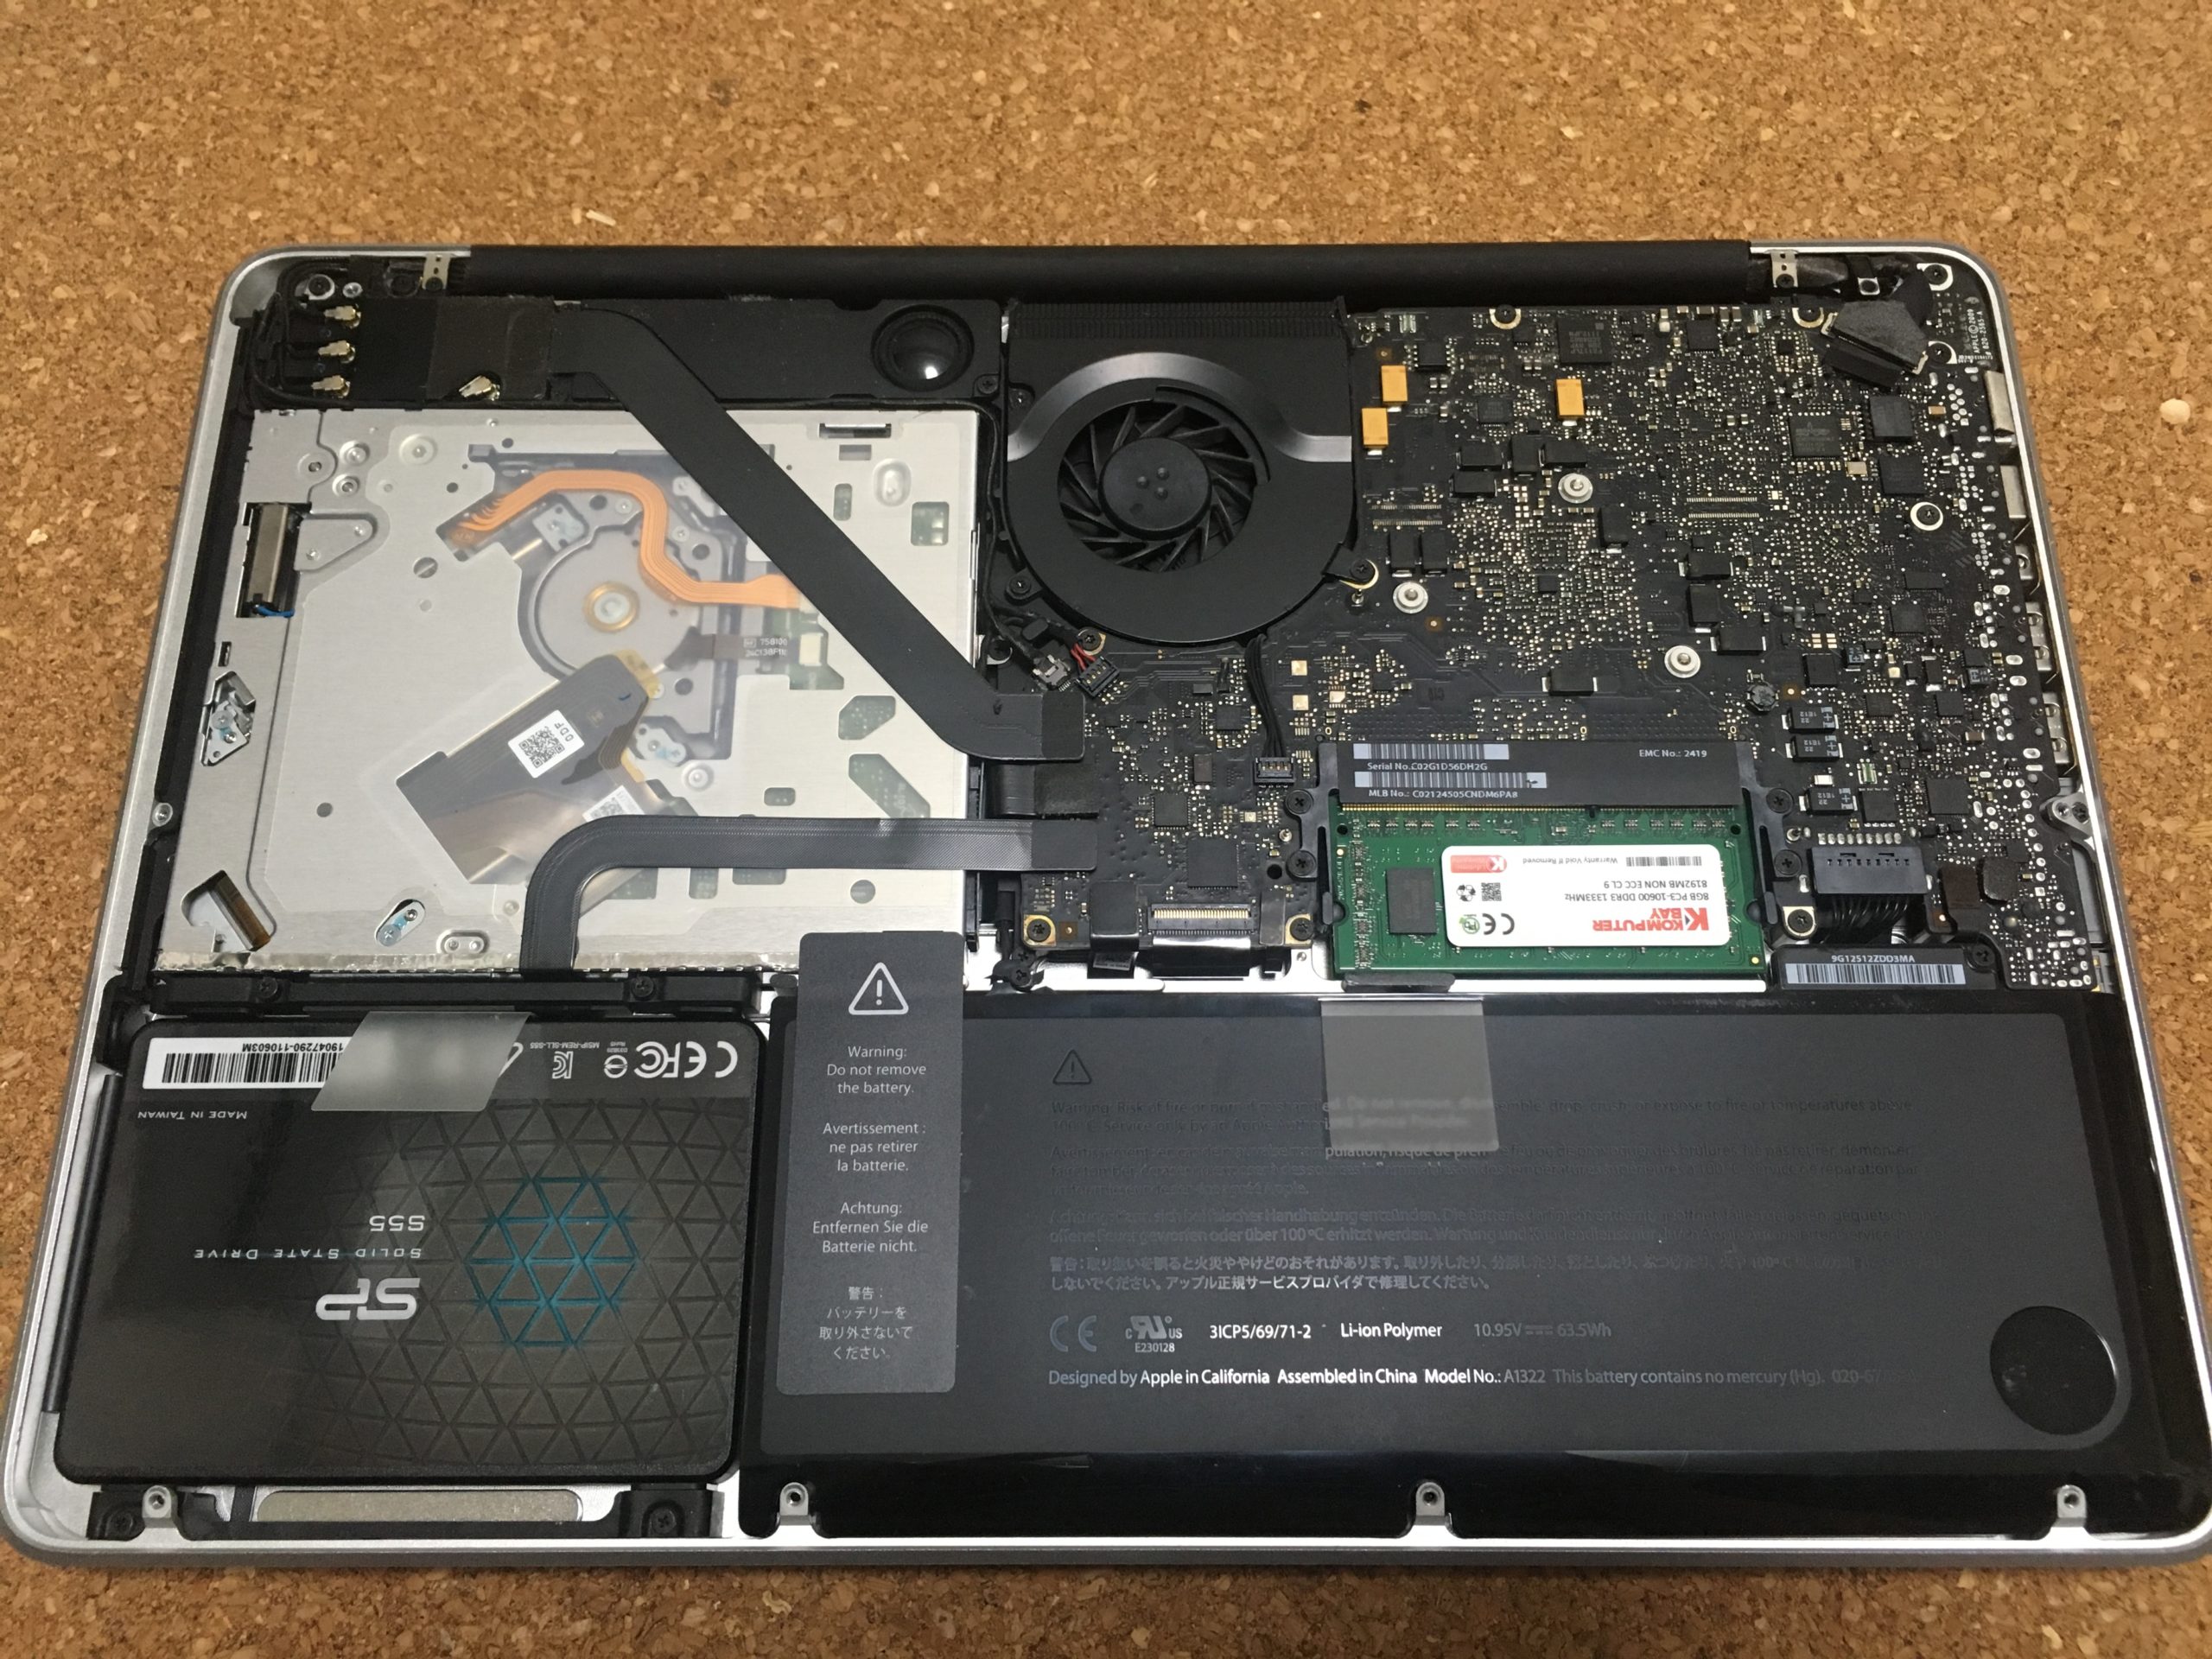 SSD交換】11年前のMacBook Pro 2011を5000円で爆速に。